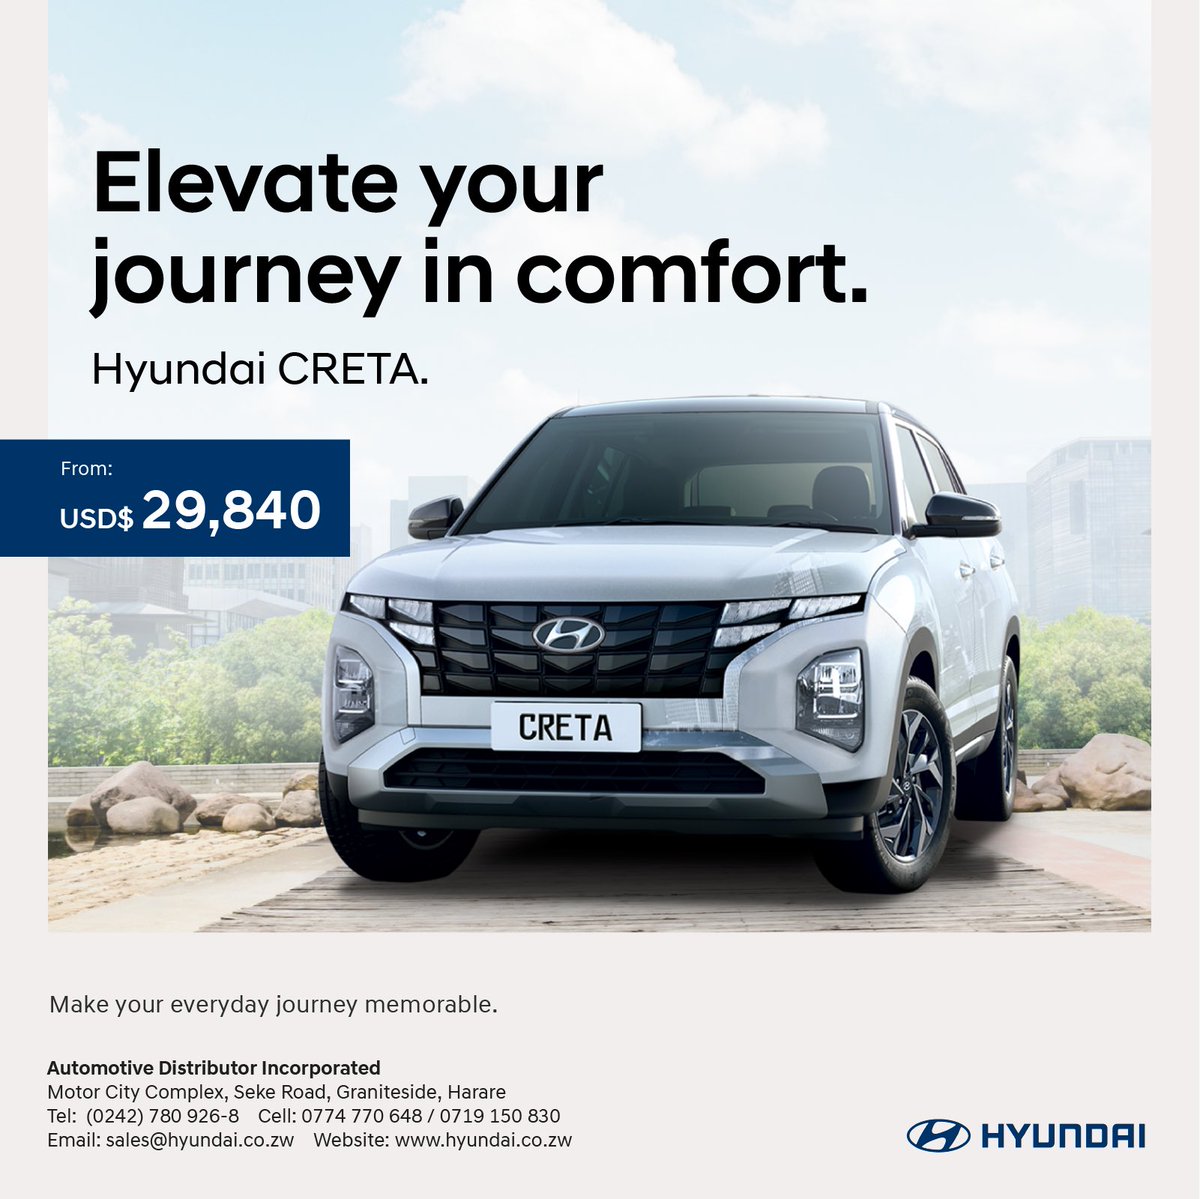 Embark on a journey filled with style, comfort and innovation in the Hyundai Creta! #hyundaicreta #NextLevelDriving #AdventureAwaits